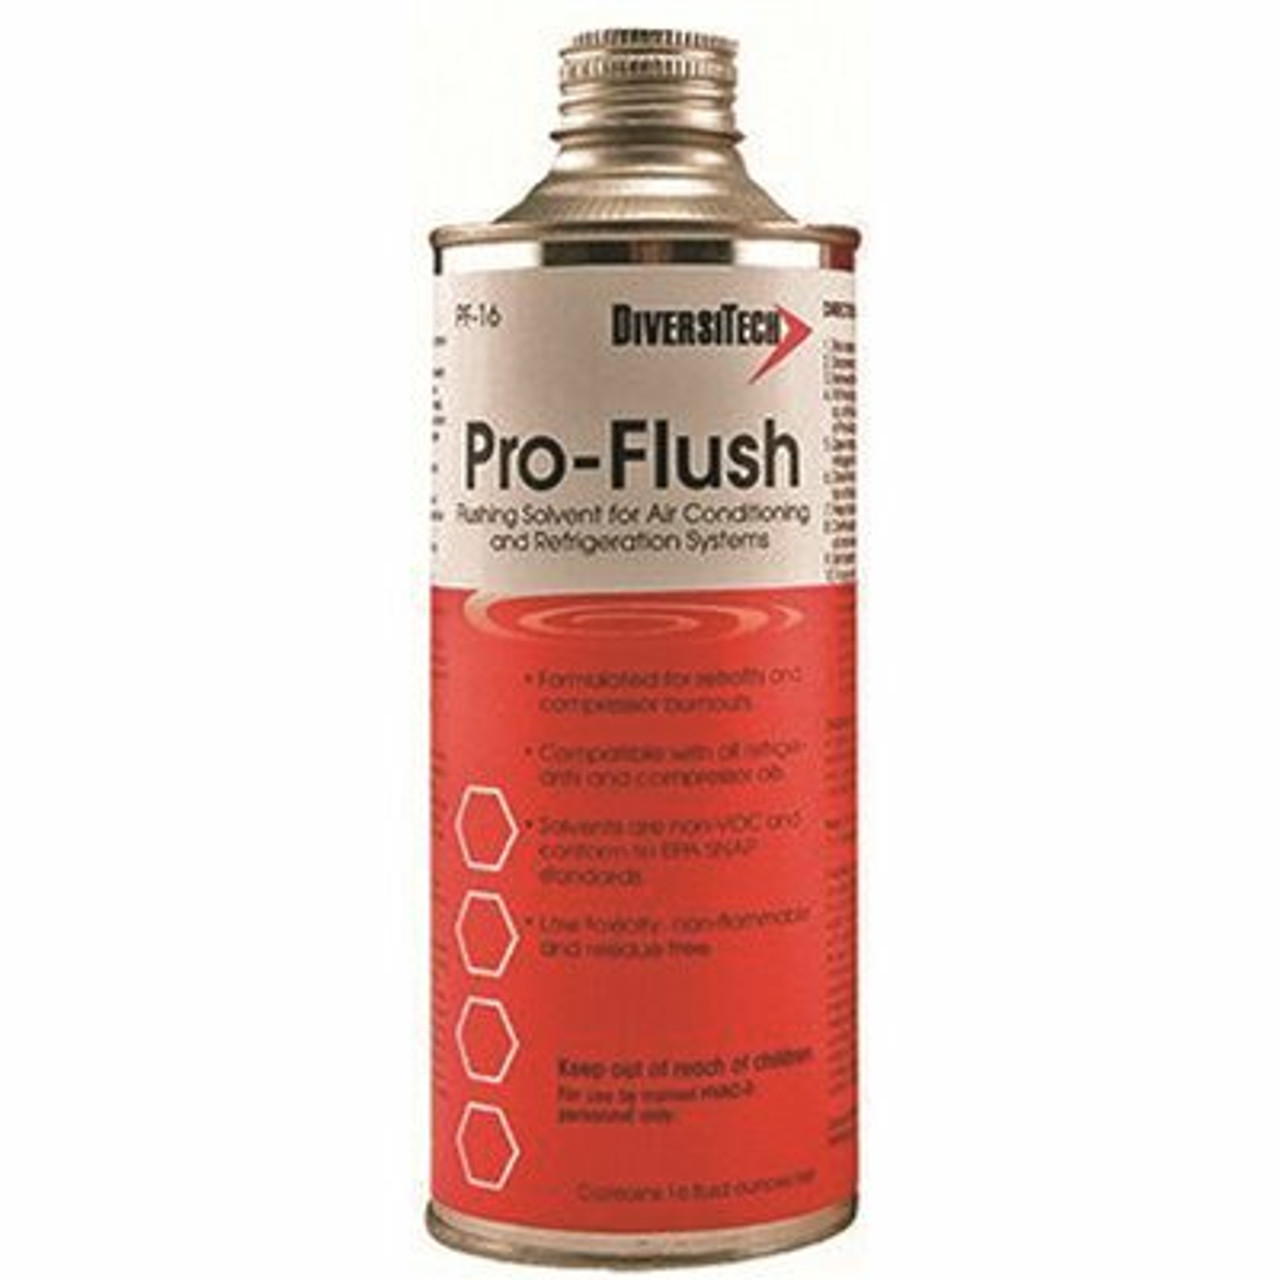 Pro-Flush Pro-Flush, Flush Solvent,16Oz